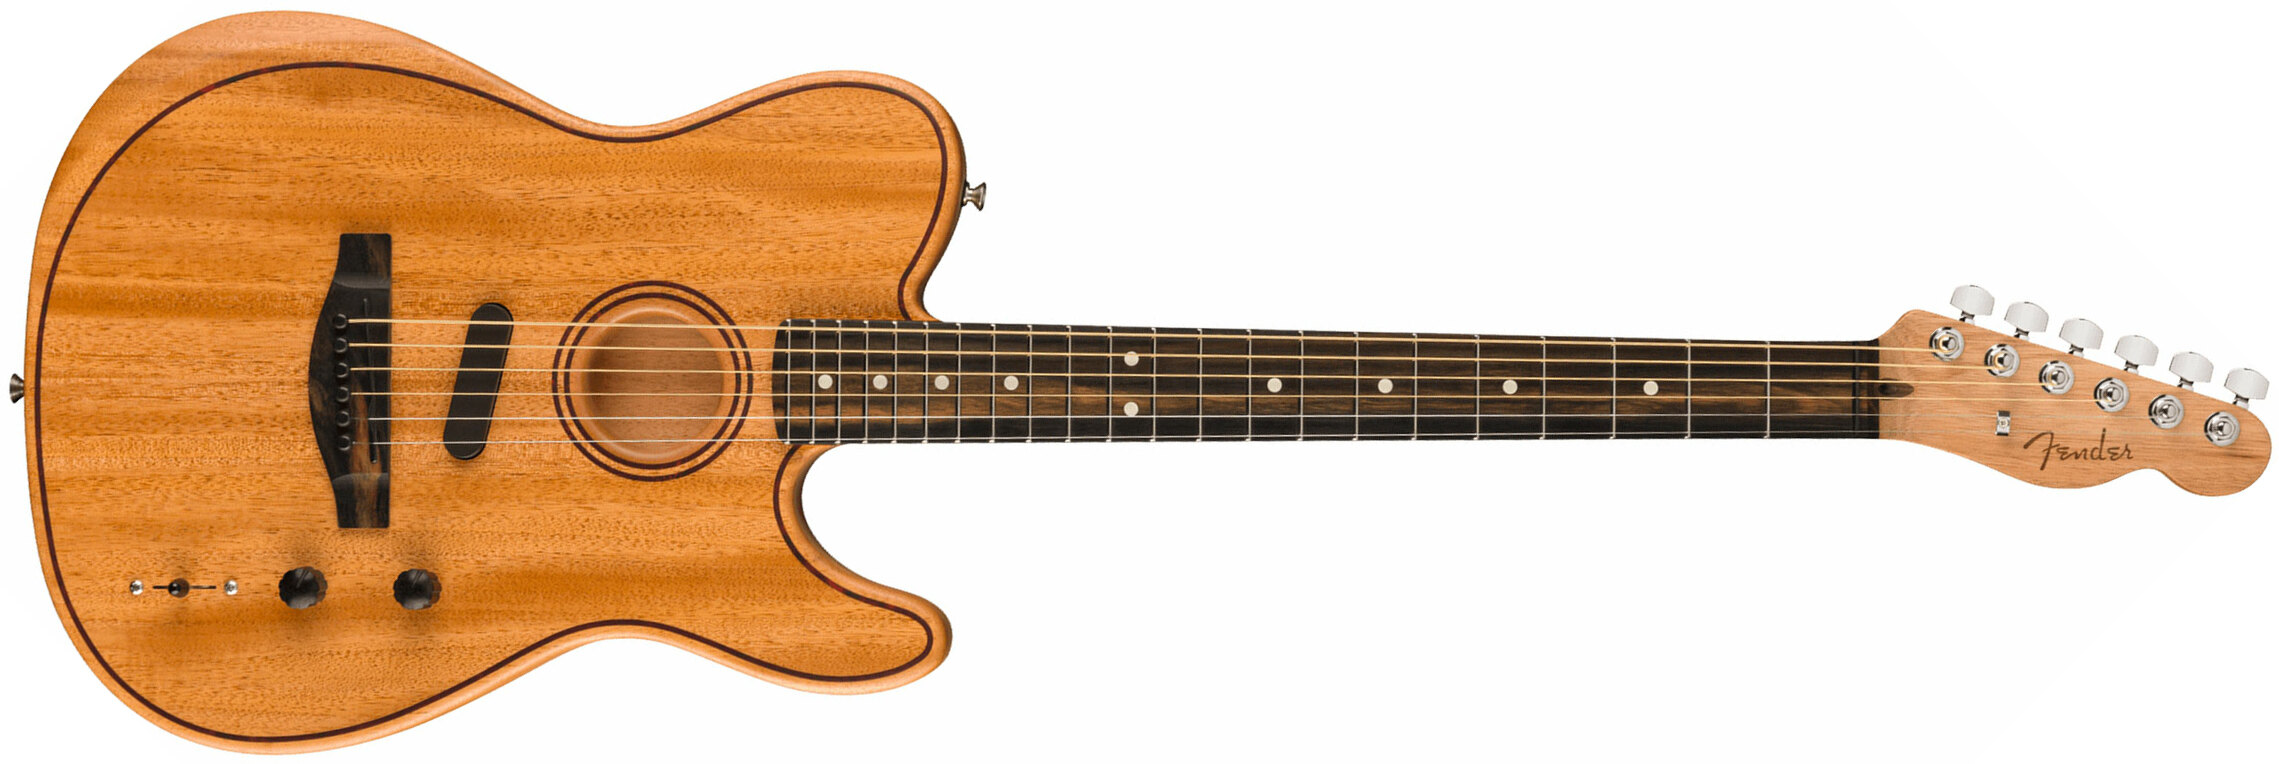 Fender Tele American Acoustasonic All Mahogany Usa Tout Acajou Eb - Natural - Guitarra electro acustica - Main picture